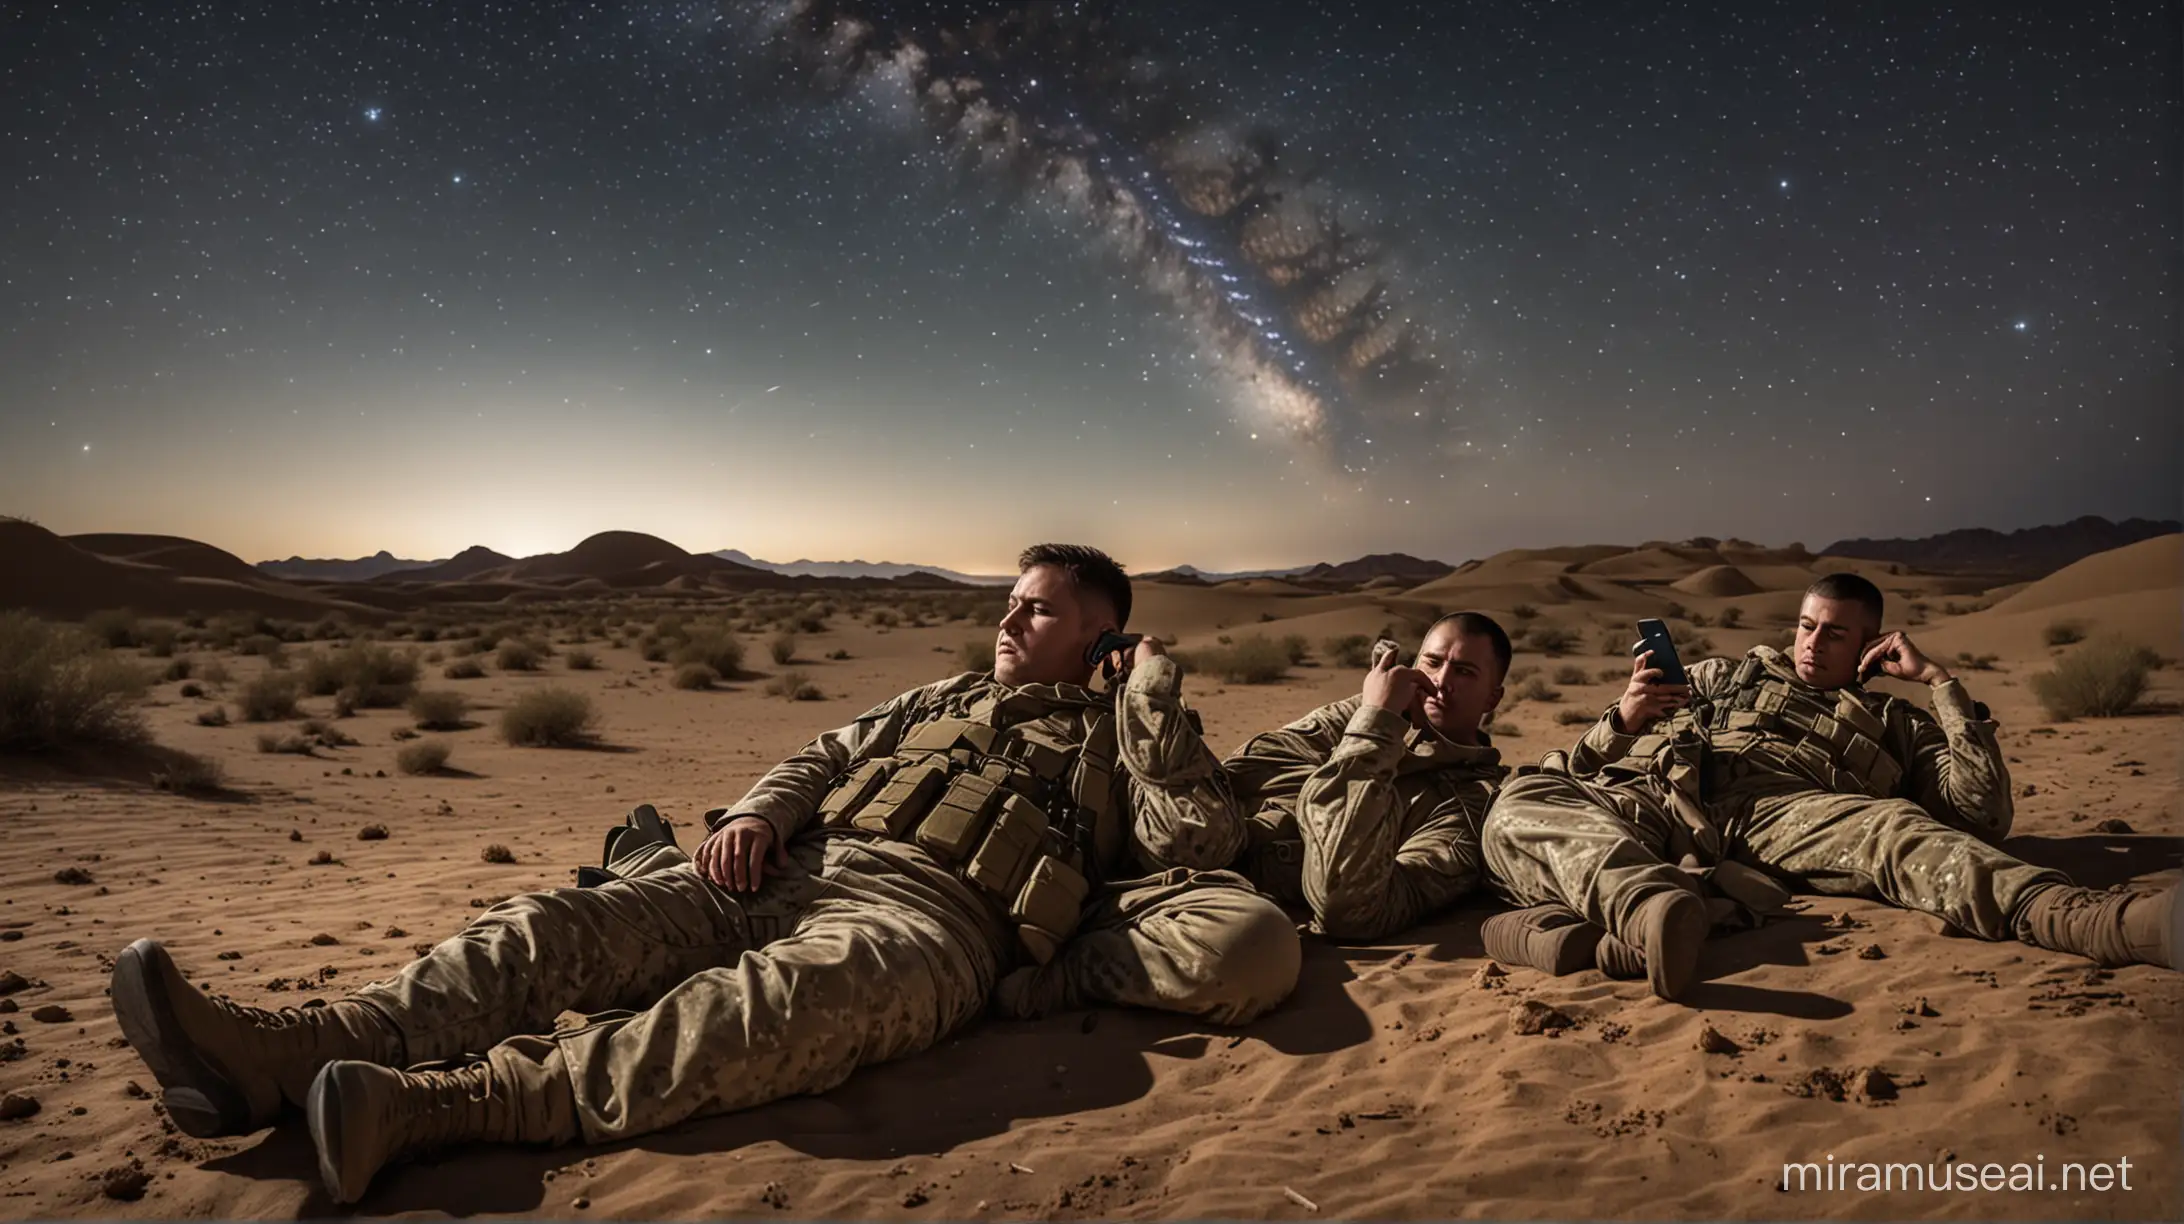 Three Soldiers Stargazing in the Desert Night